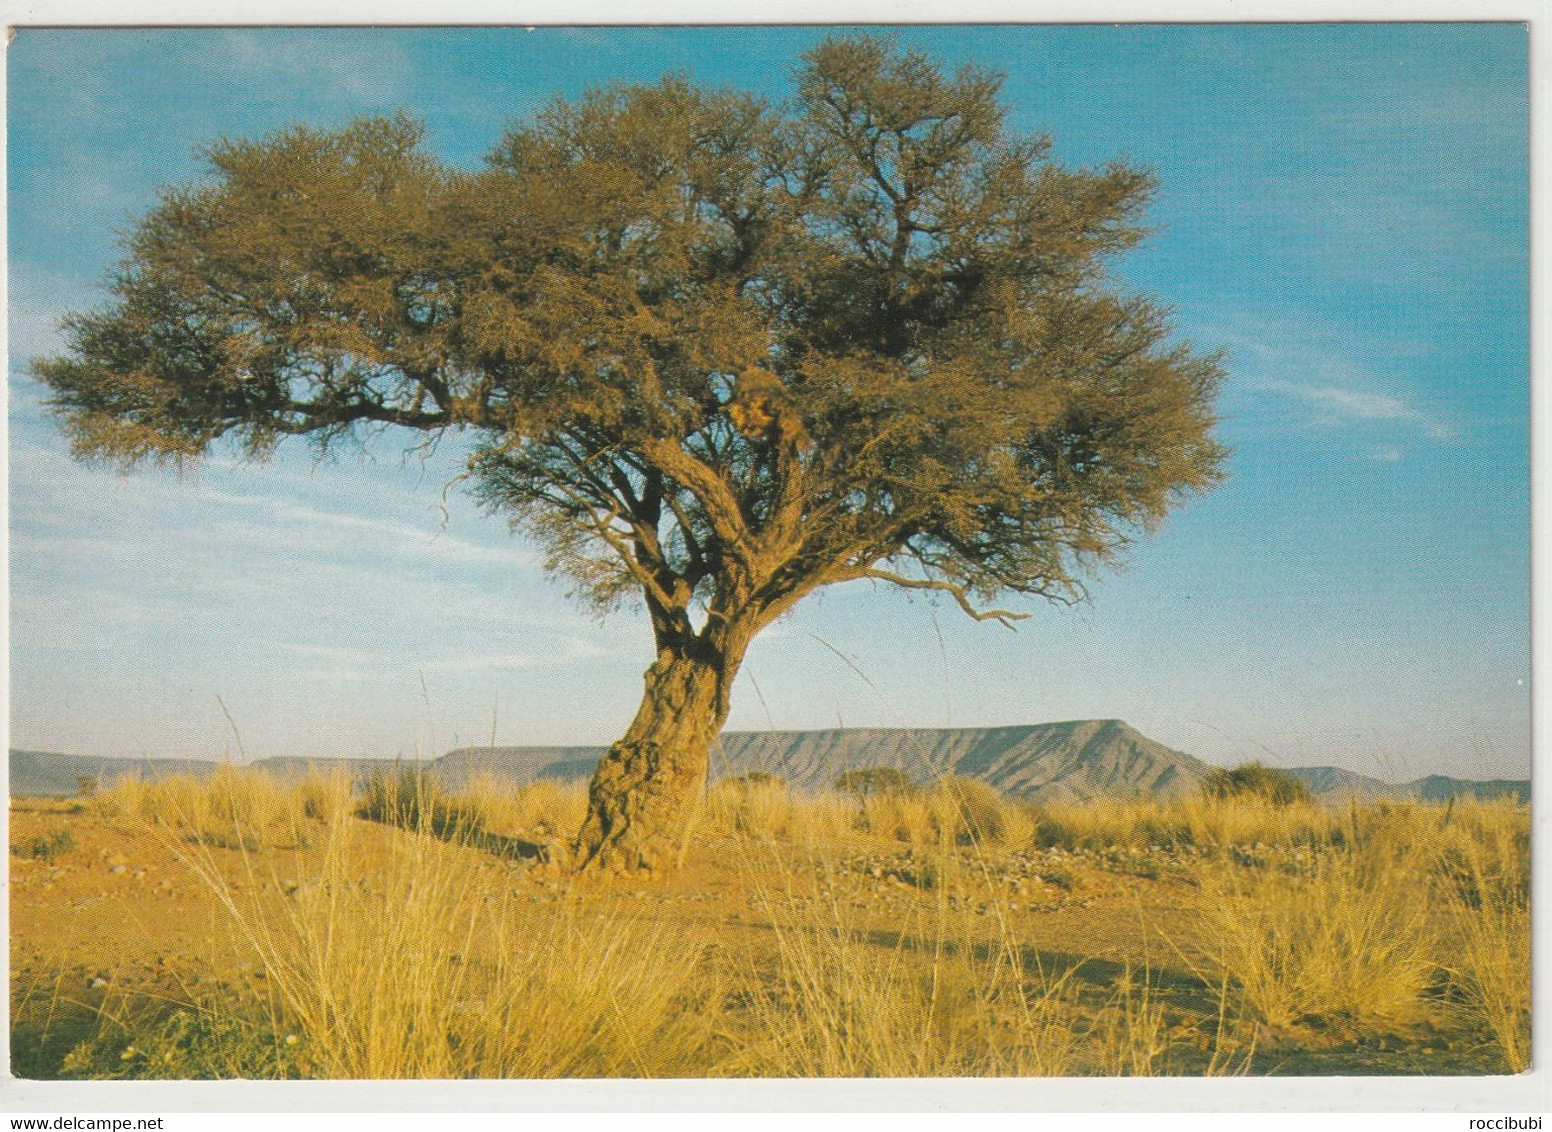 SWA, Kameldornbaum - Namibie